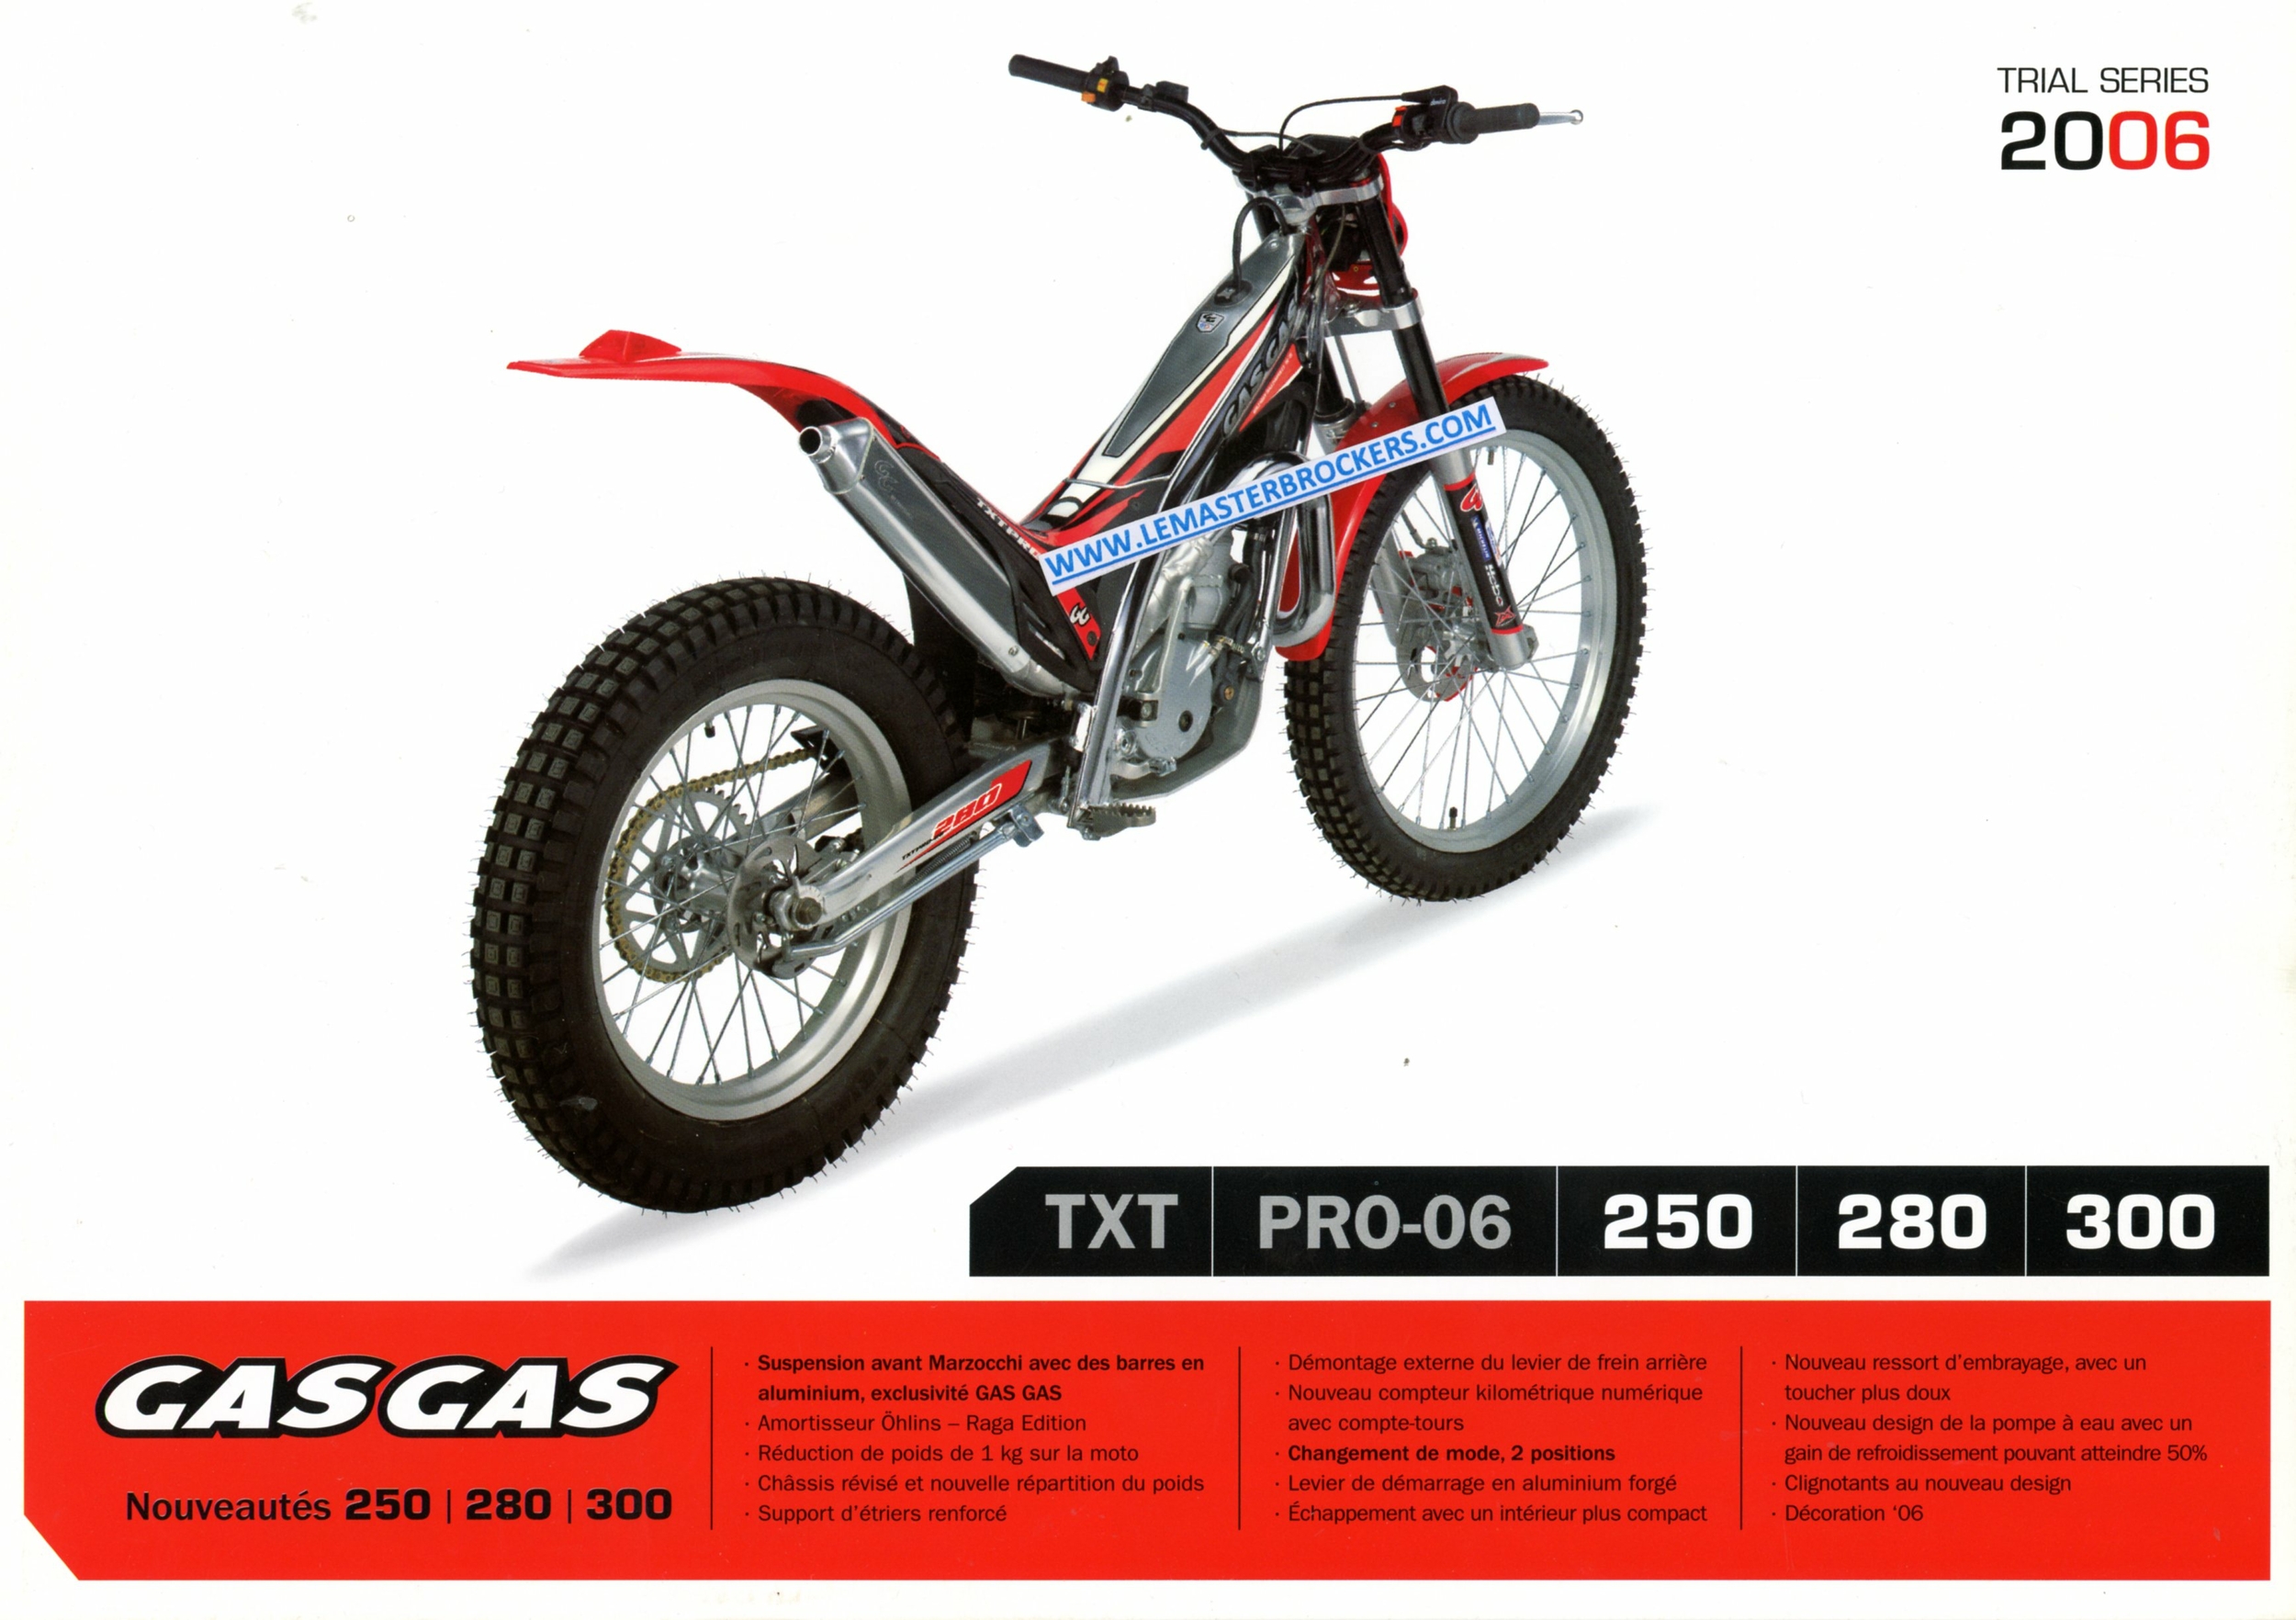 PROSPECTUS MOTO TRIAL GASGAS TXT 2006 250 280 300-LEMASTERBROCKERS